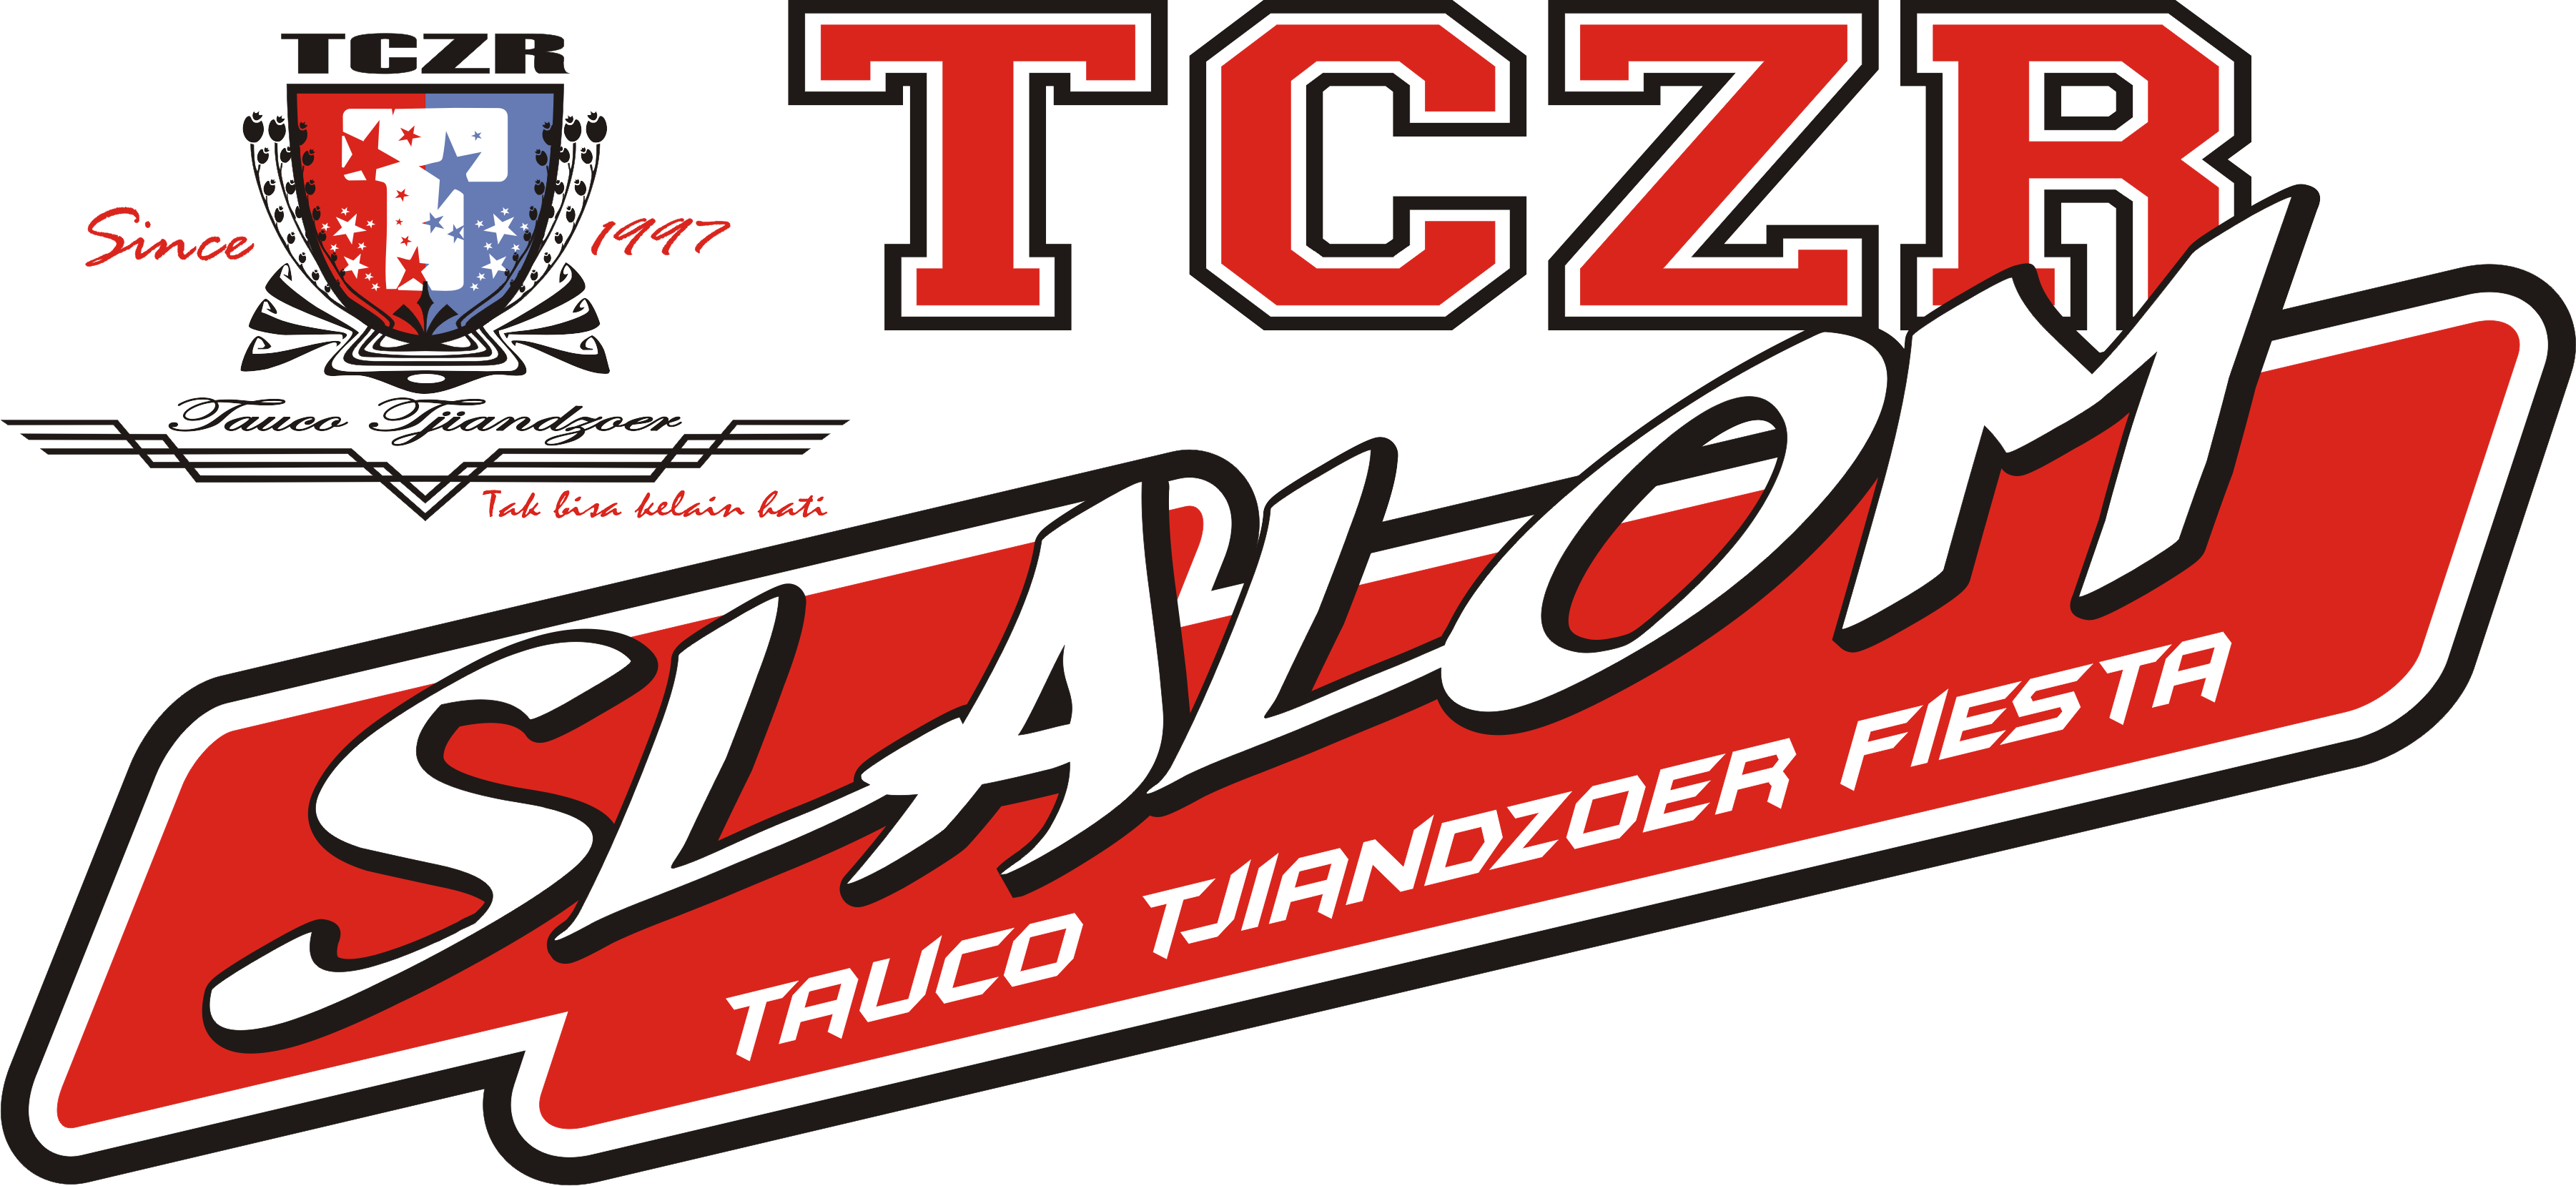 TCZR EVENT Tczr Tauco Tjiandzoer